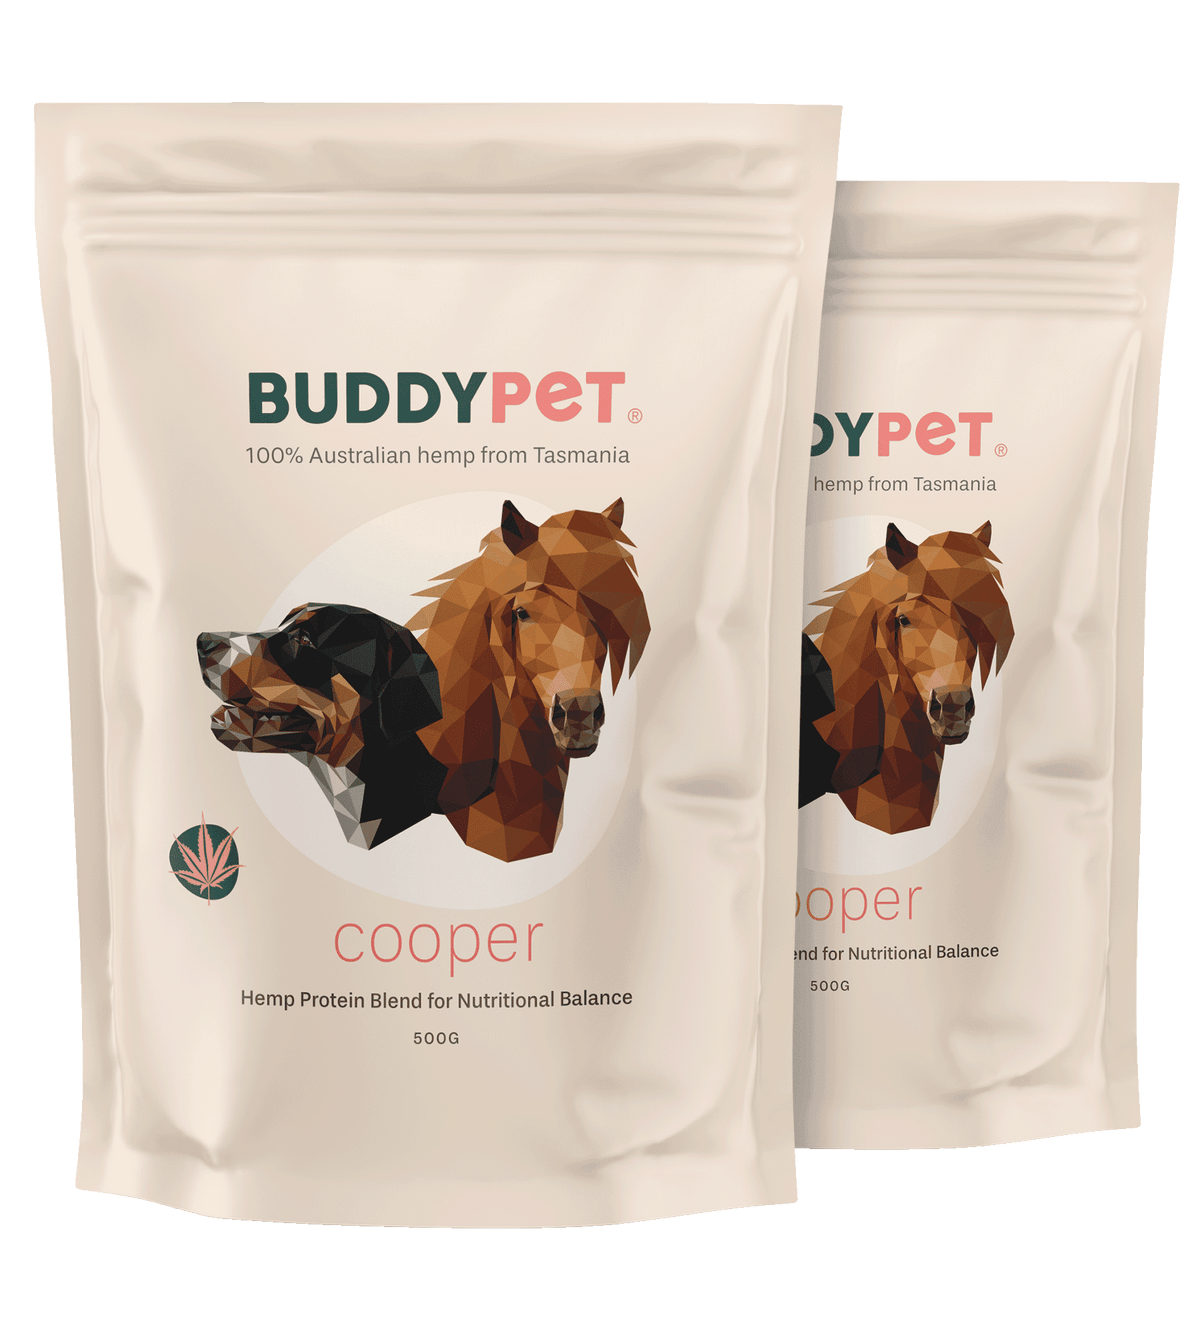 BUDDYPET hemp protein for dogs bundle